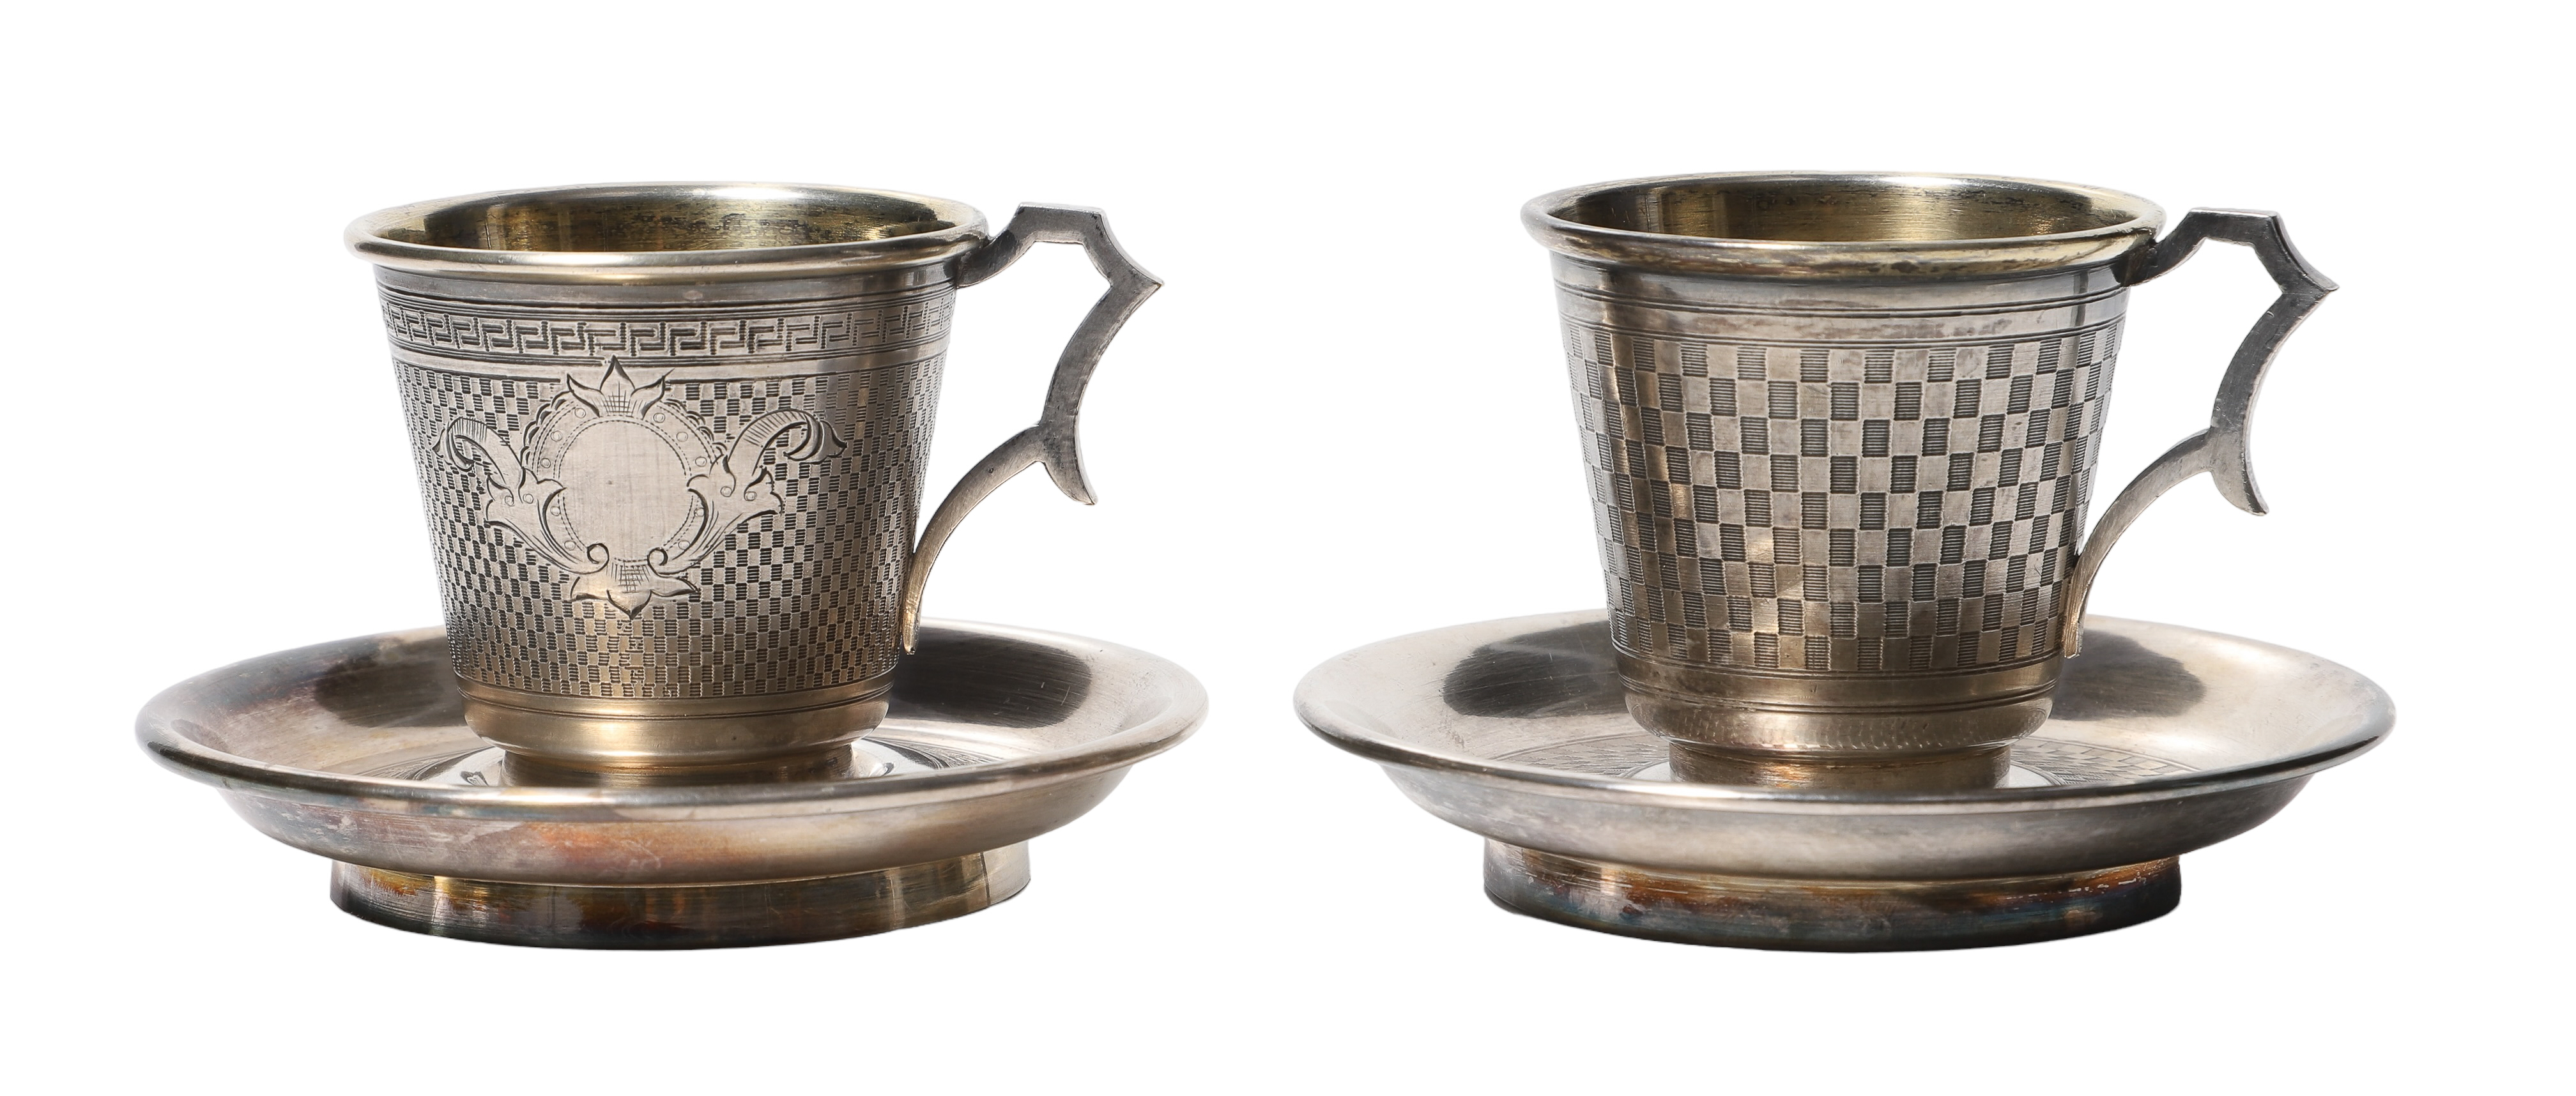  2 Warszawa silverplate teacups 2e1c5a